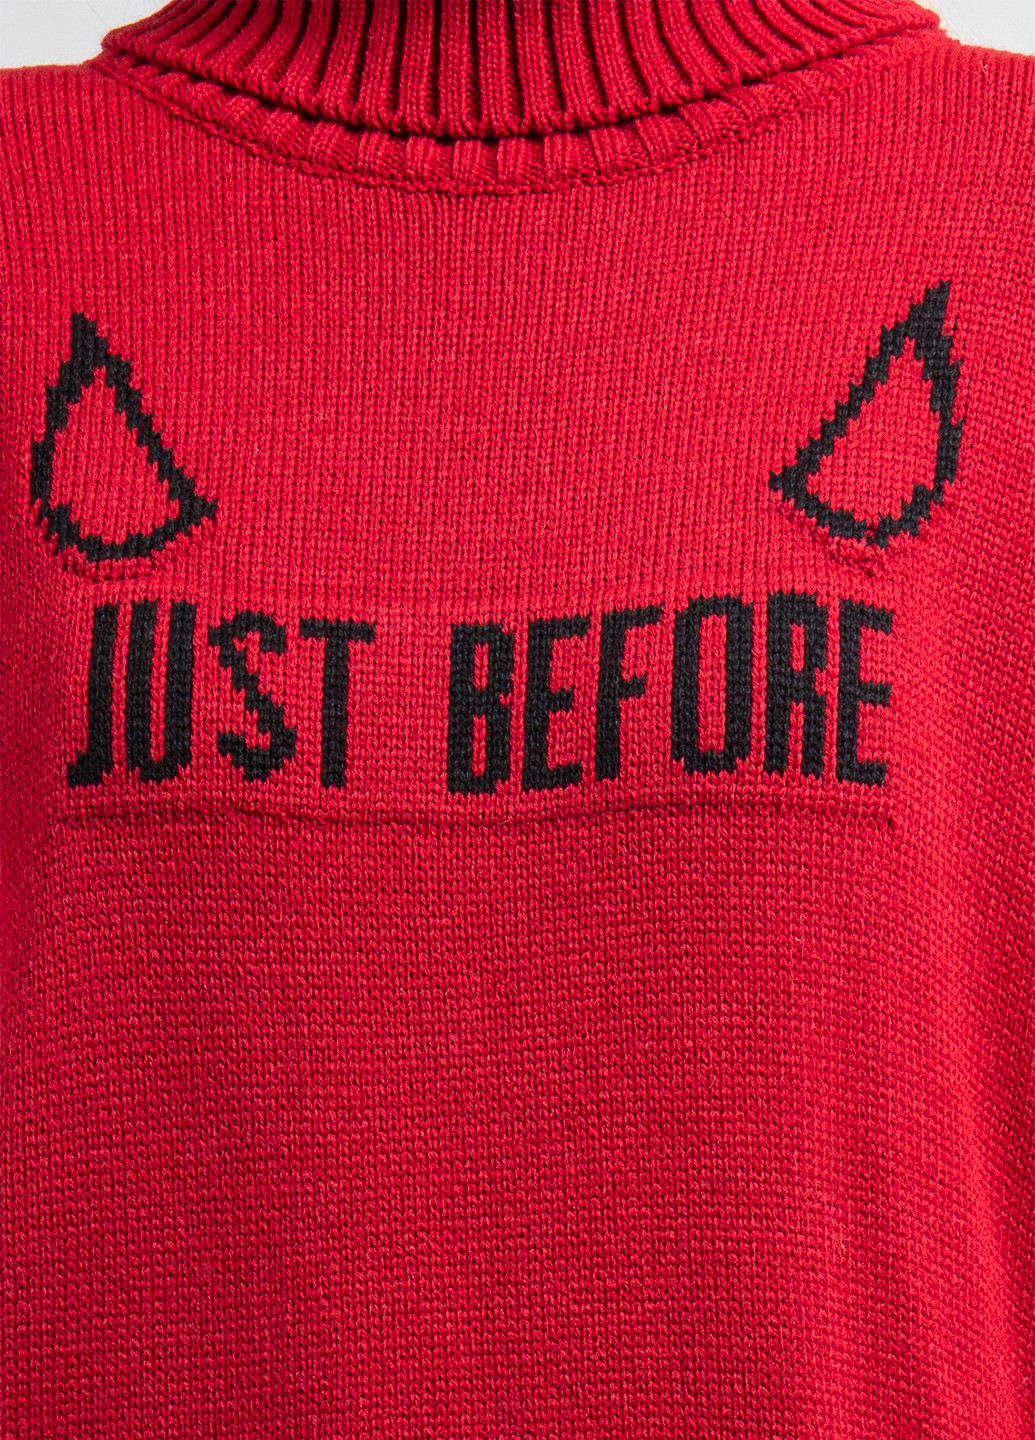 Бордовый зимний свитер J.B4 (Just Before)